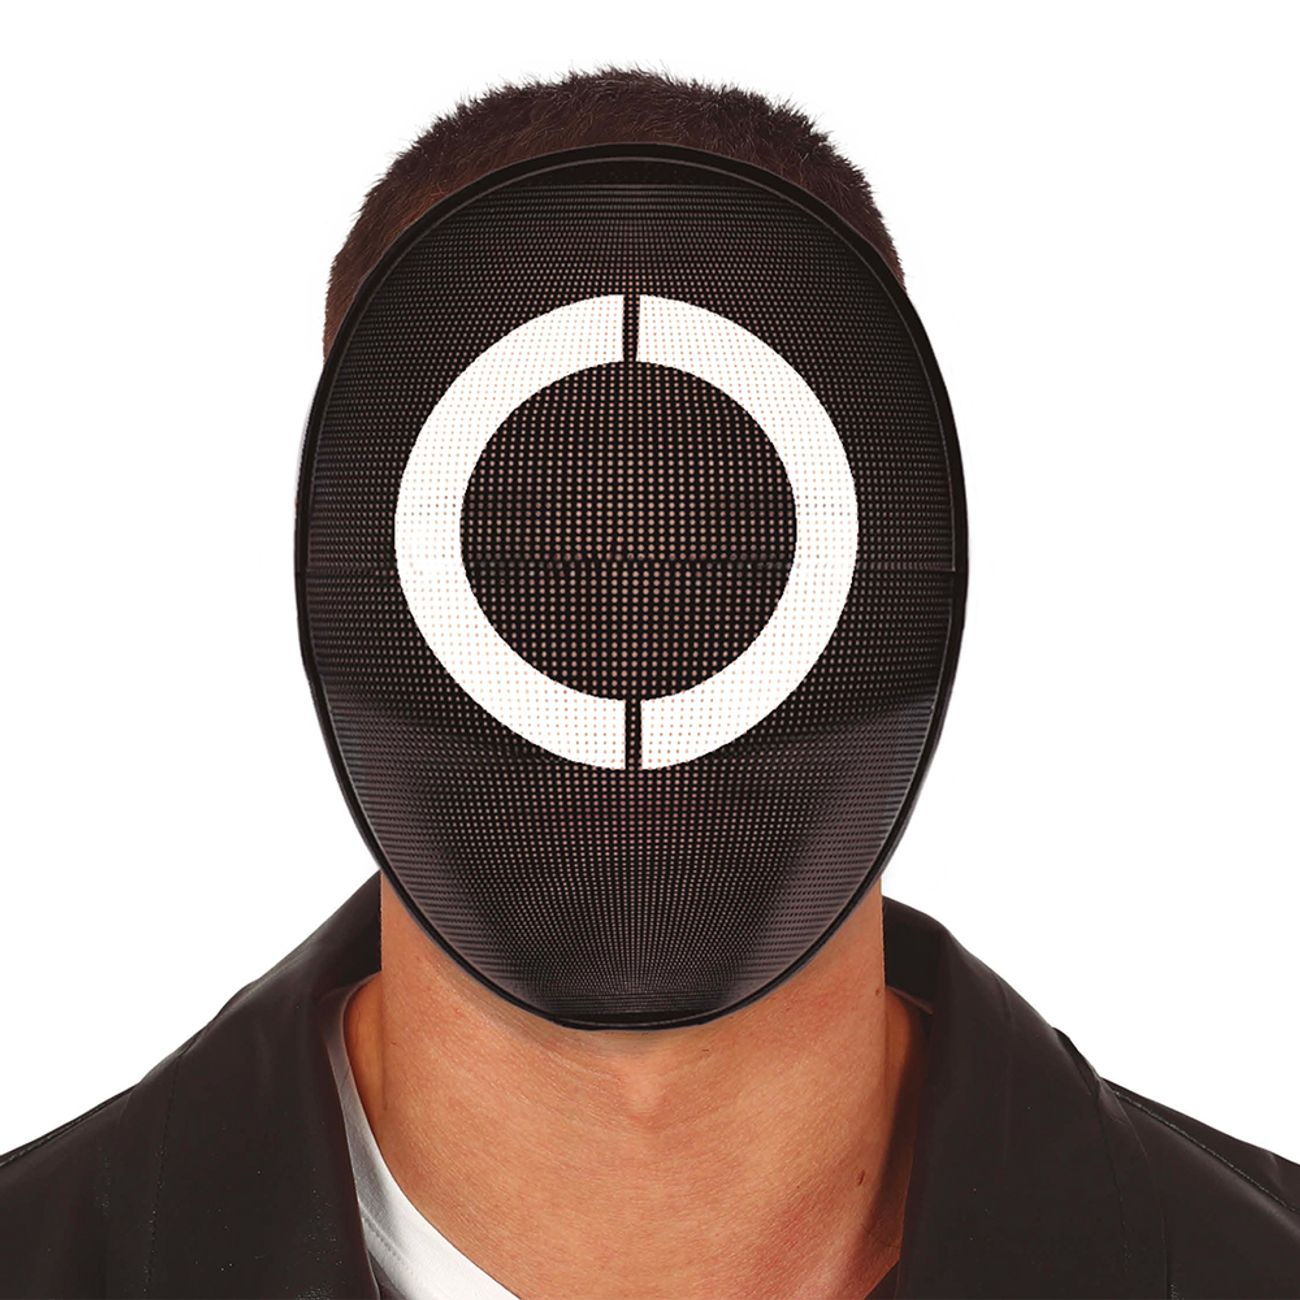 the-gamer-round-mask-82646-1